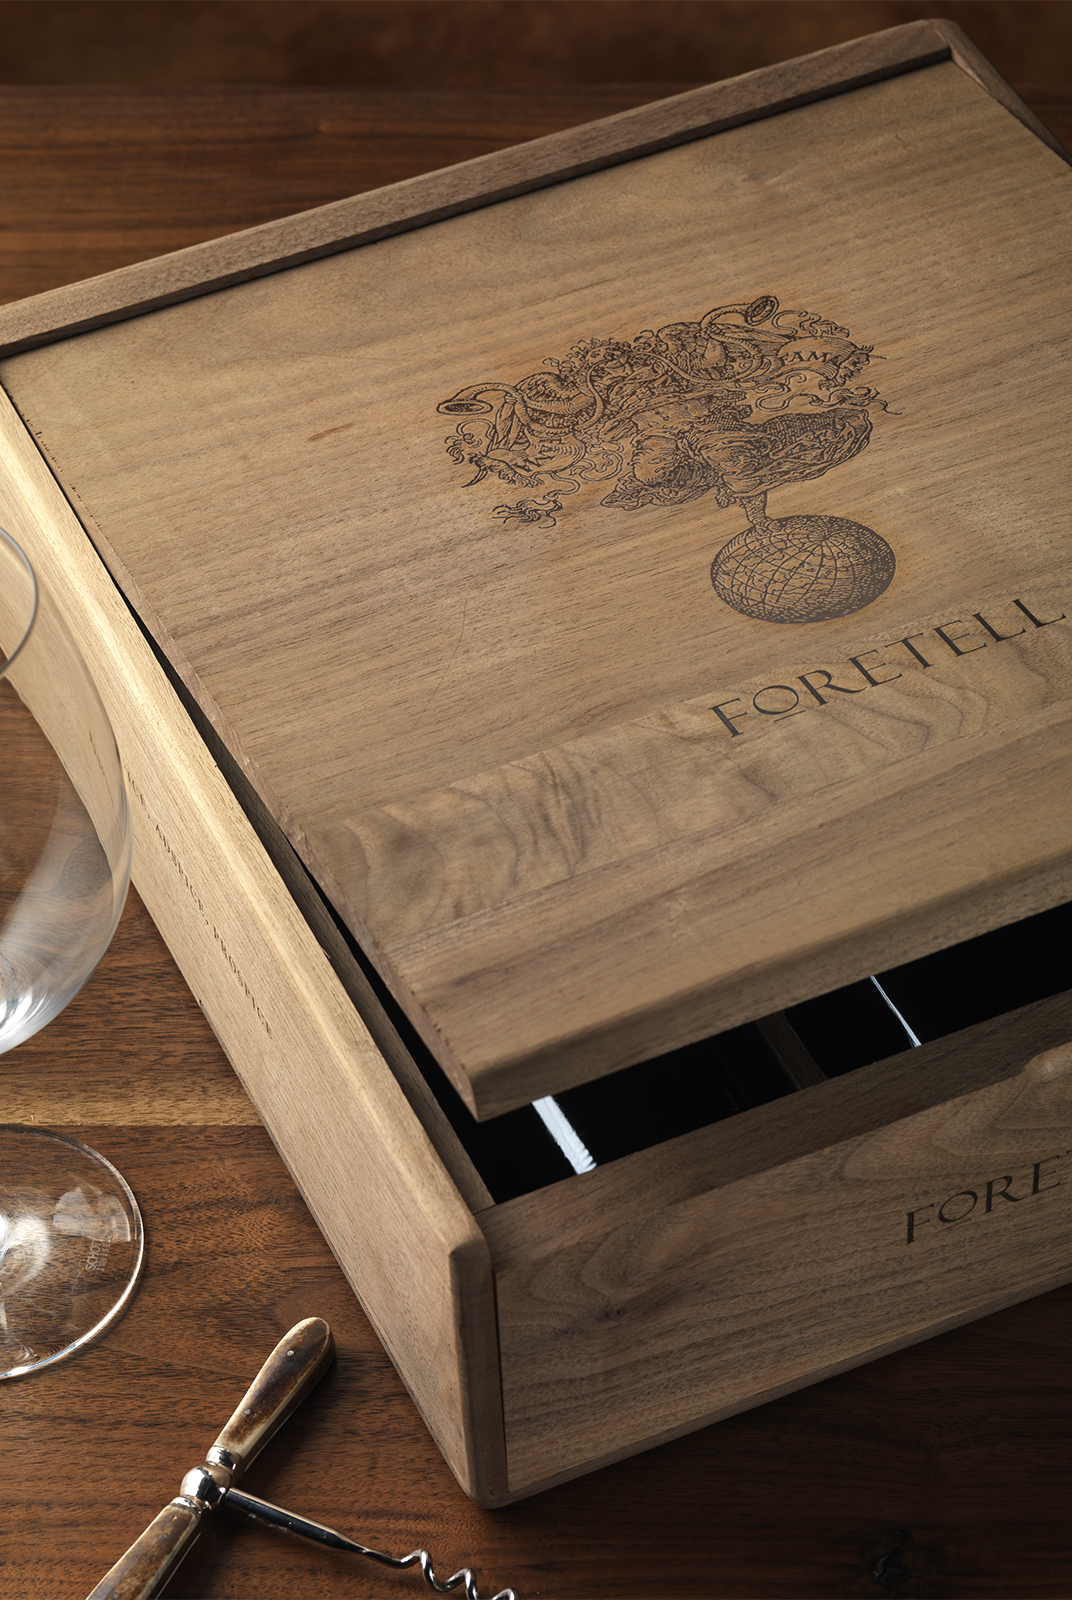 Foretell Wine Wooden Box Design